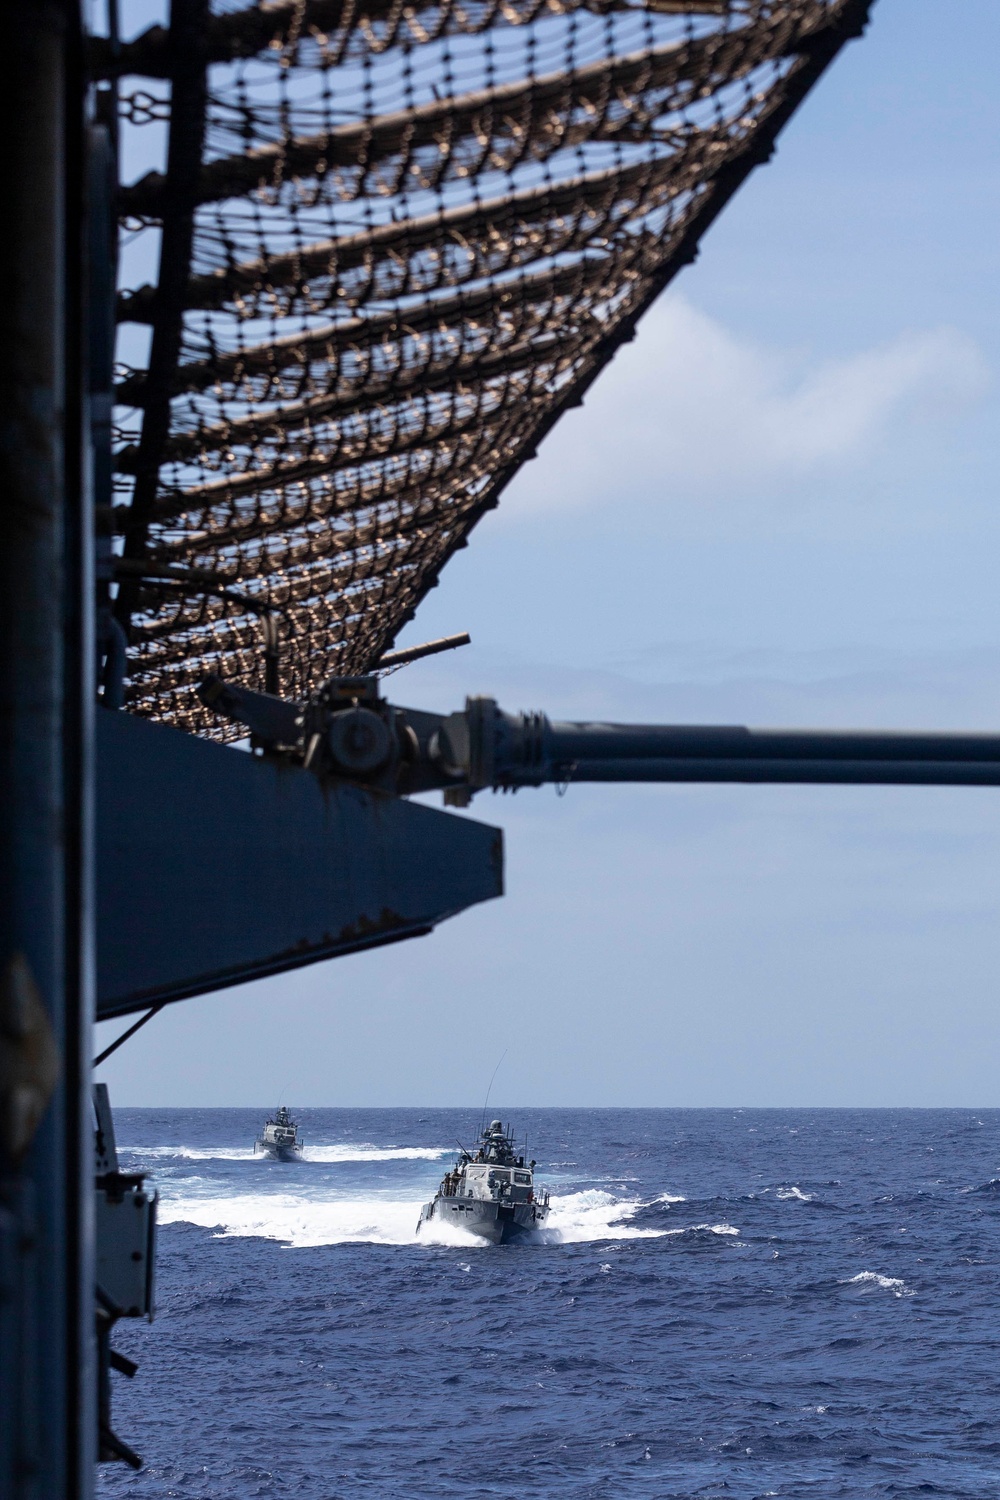 Mark VI refuels alongside USS Ashland